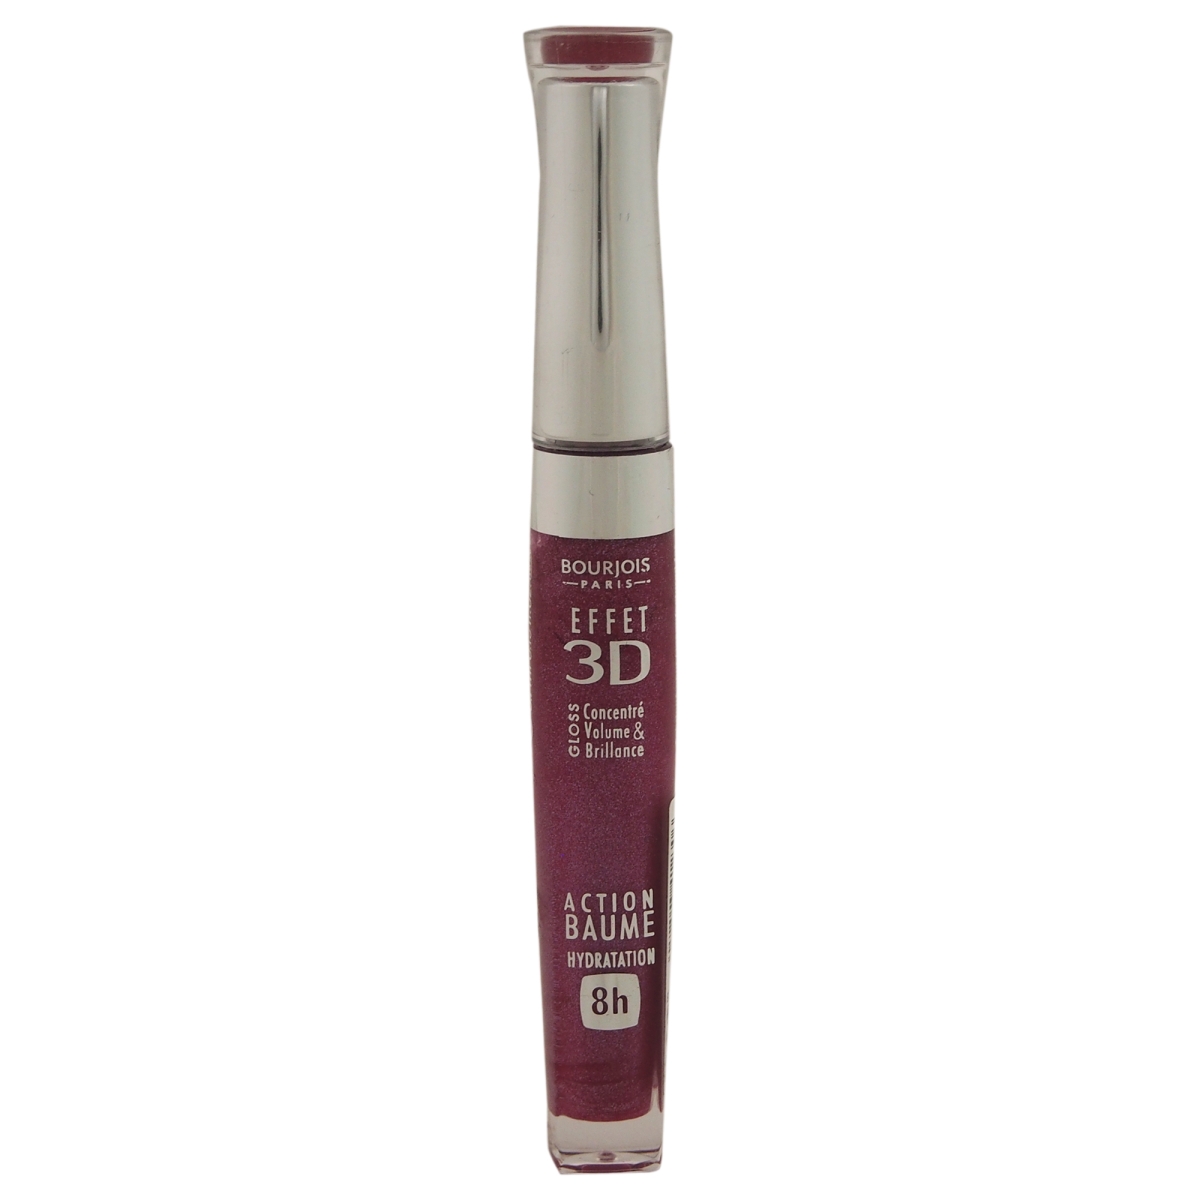 W-c-9325 0.19 Oz No. 23 3d Effet Framboise Magnific Lip Gloss For Women